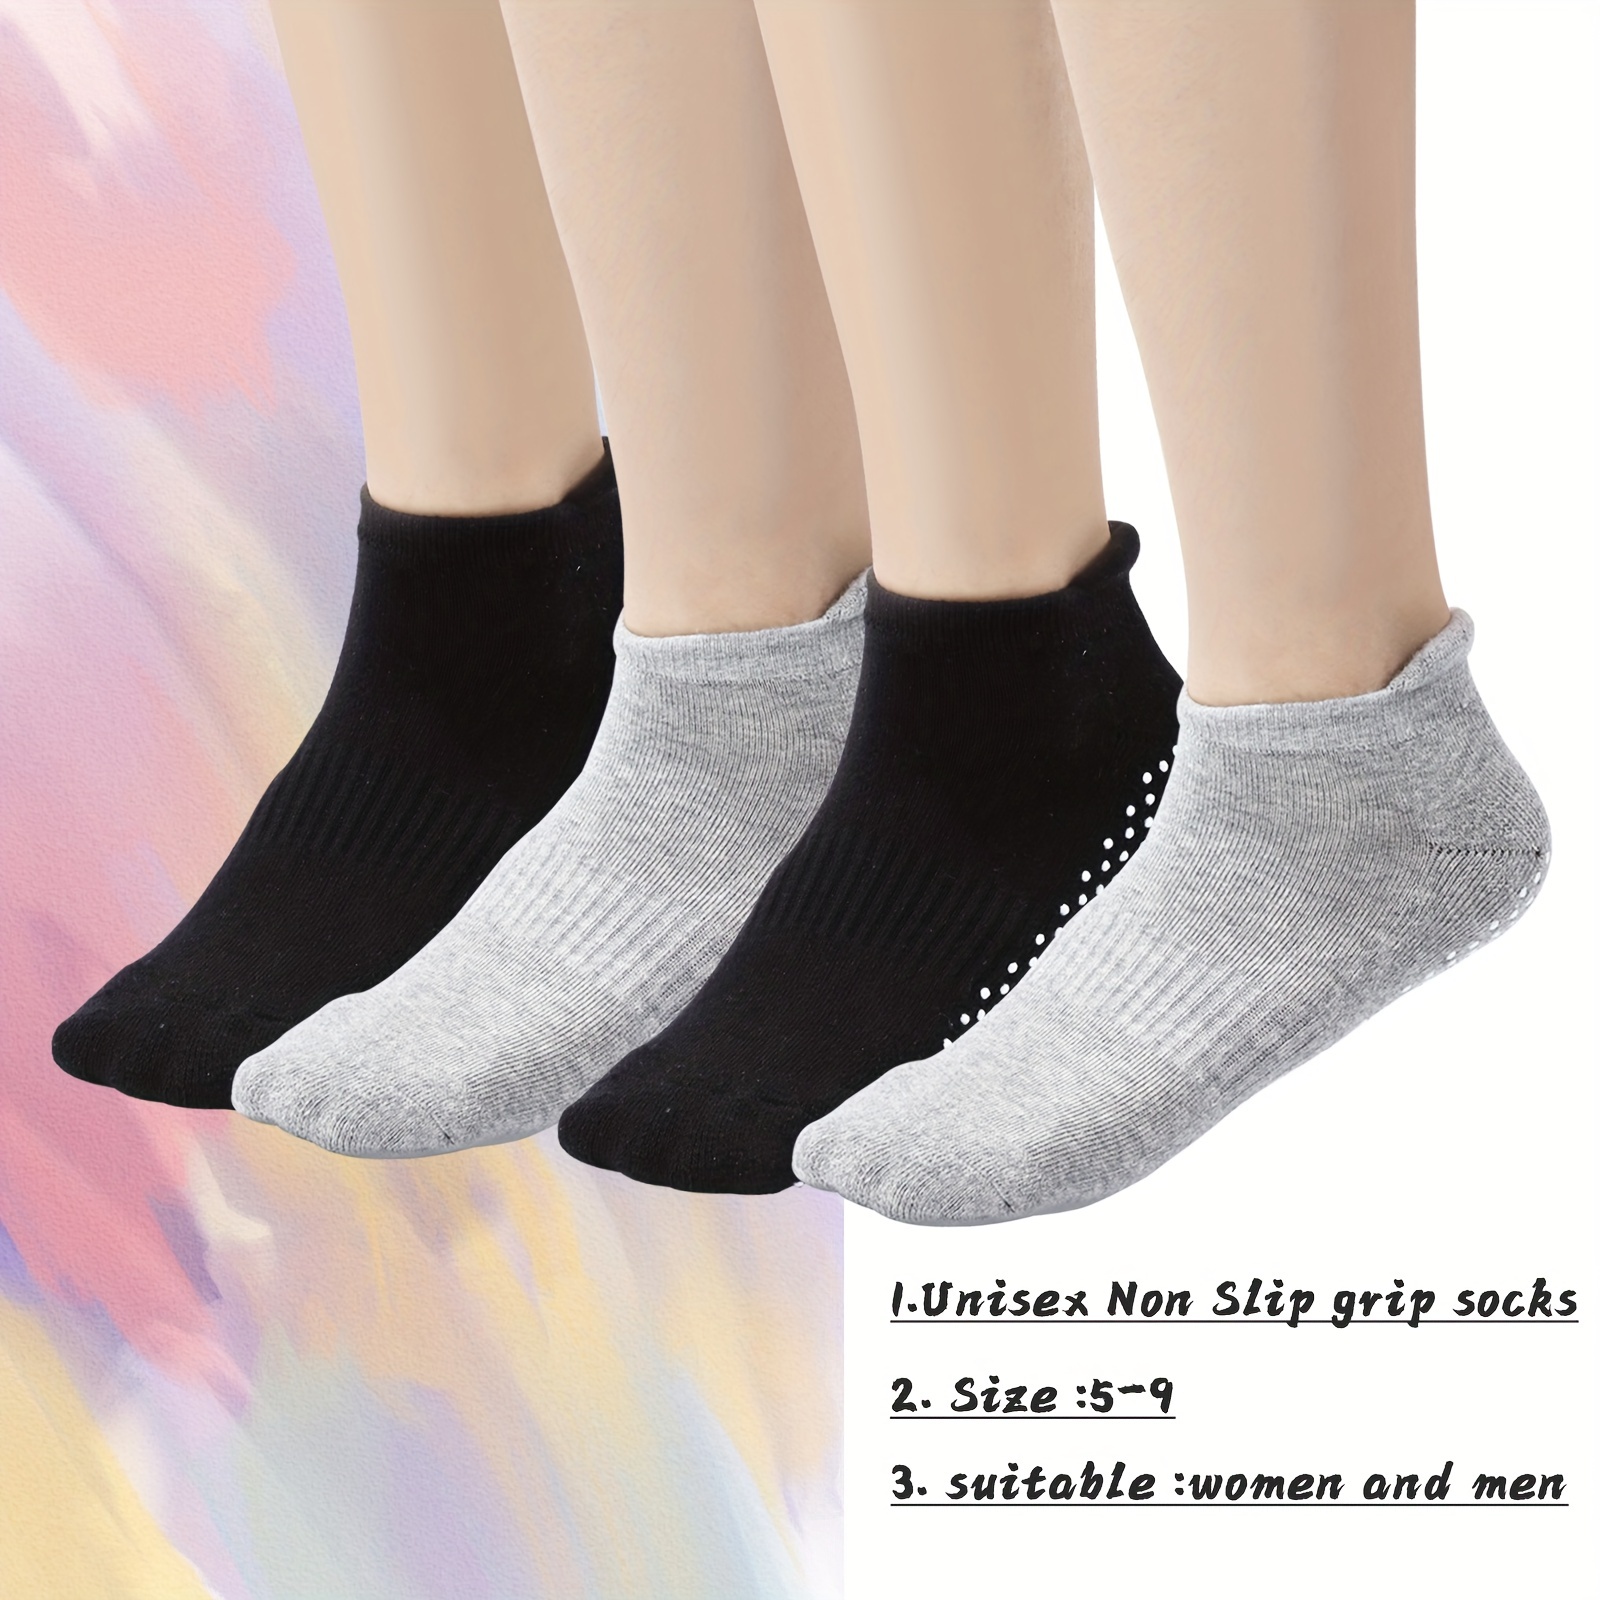 Non Slip Grip Socks,Warm Thick Soft Socks,Yoga Pilates Hospital